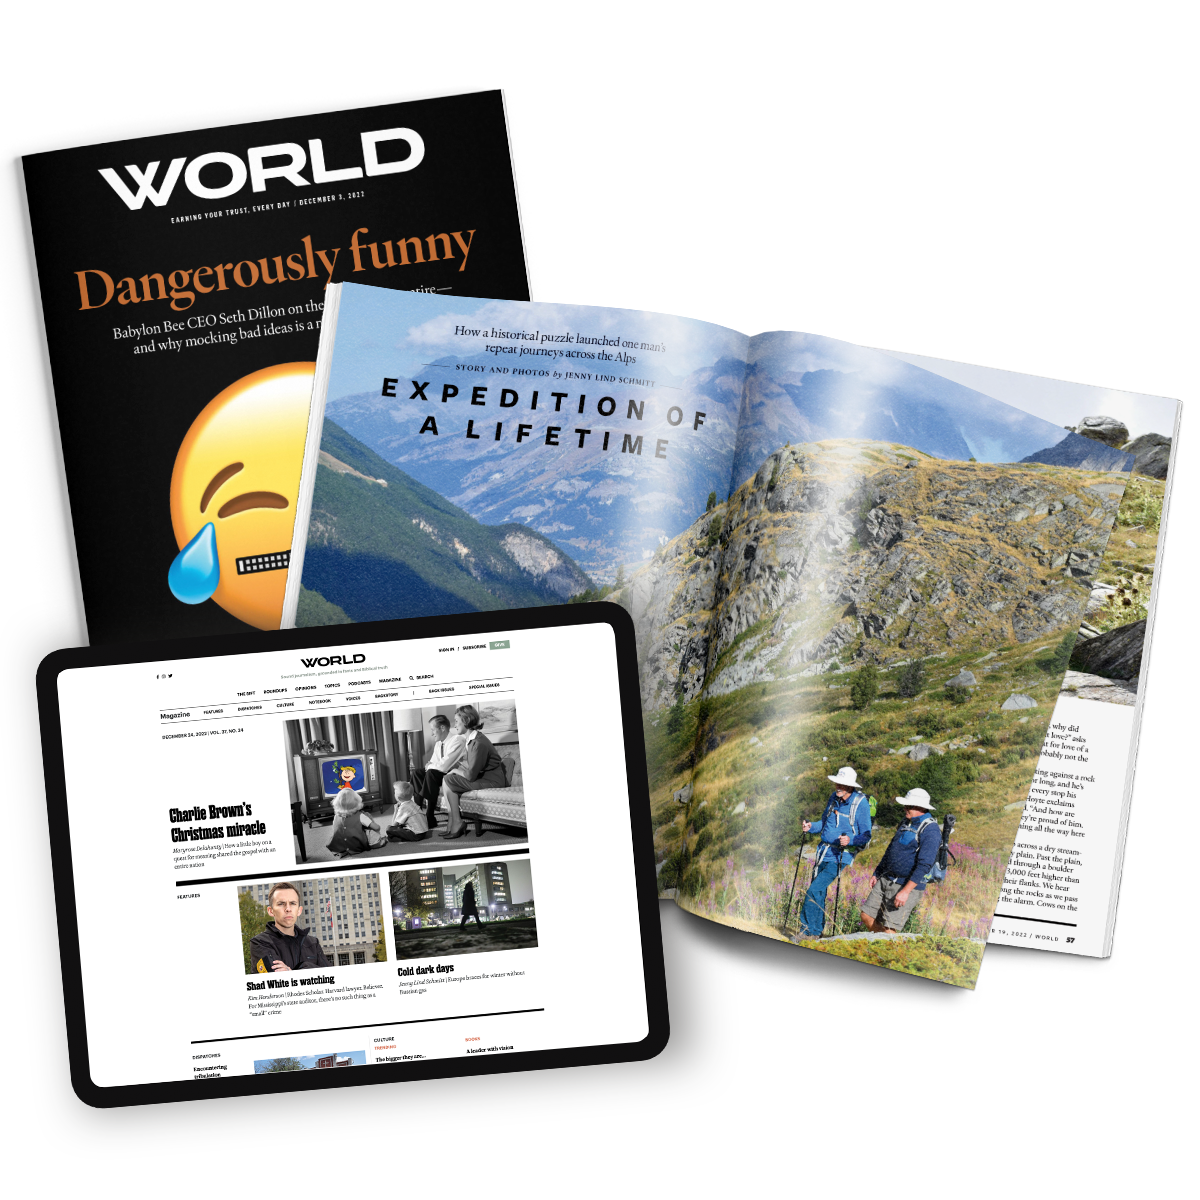 WORLD Subscription